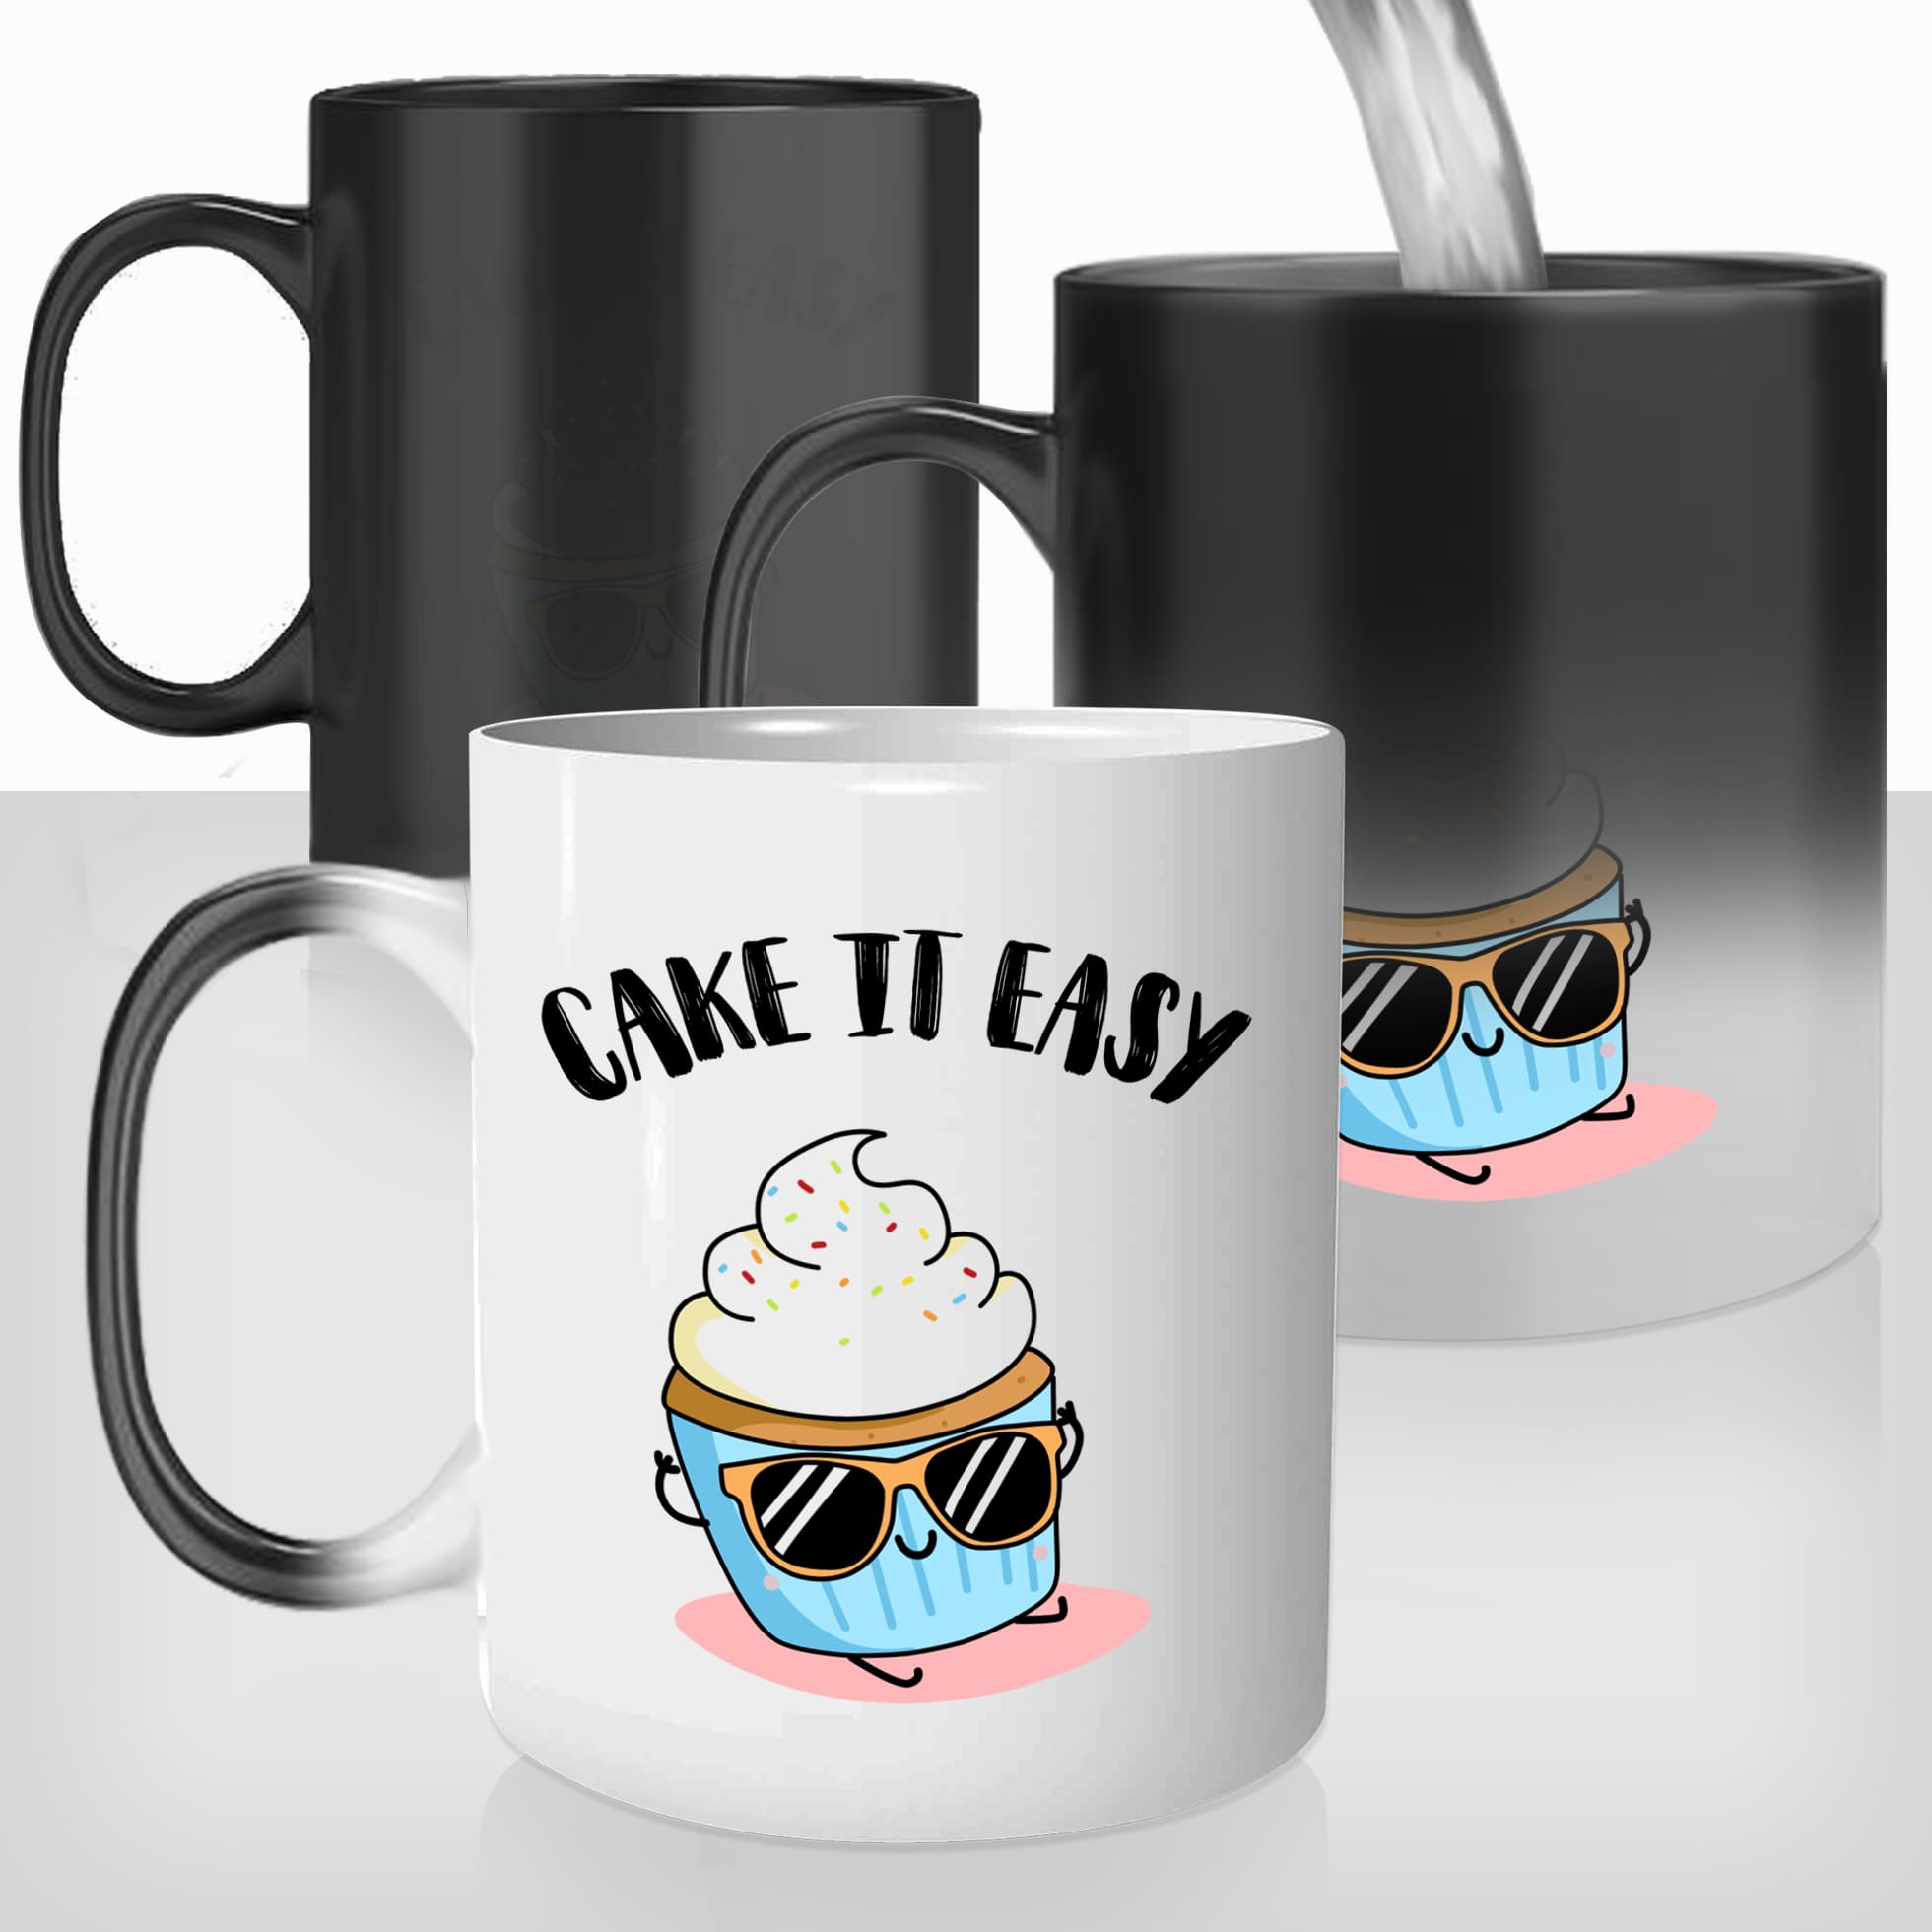 mug-magique-tasse-magic-thermo-reactif-gateau-muffin-cupcake-cake-it-easy-citation-lunettes-cool-drole-humour-offrir-cadeau-original-fun